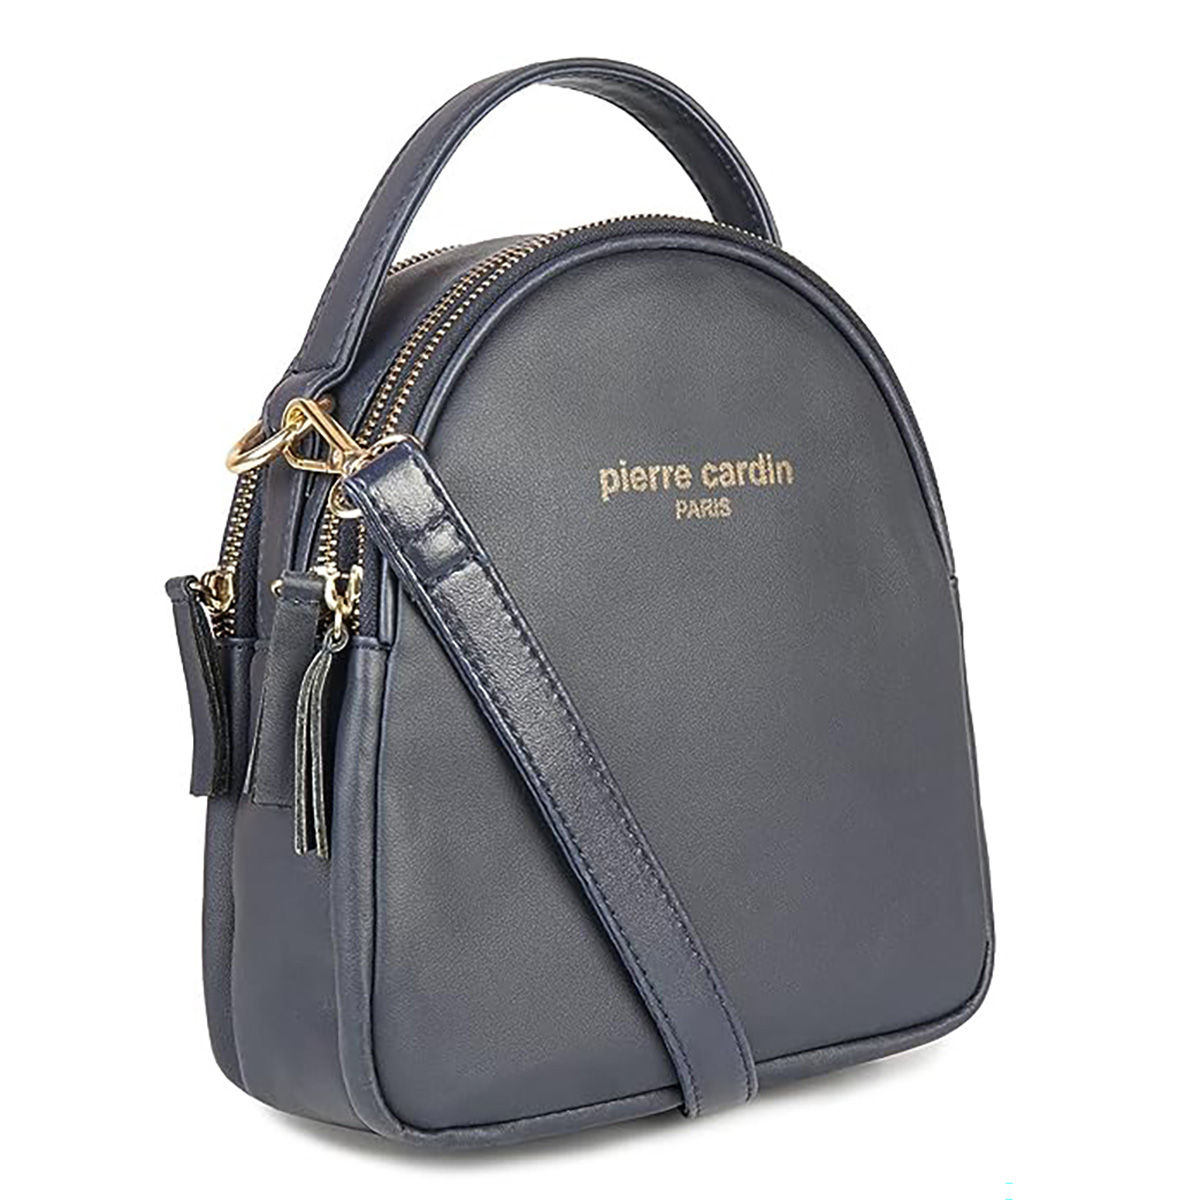 Pierre Cardin Paris Black Leather Handbag Adjustable Handle | Etsy | Black leather  handbags, Vintage leather handbag, Leather handbags